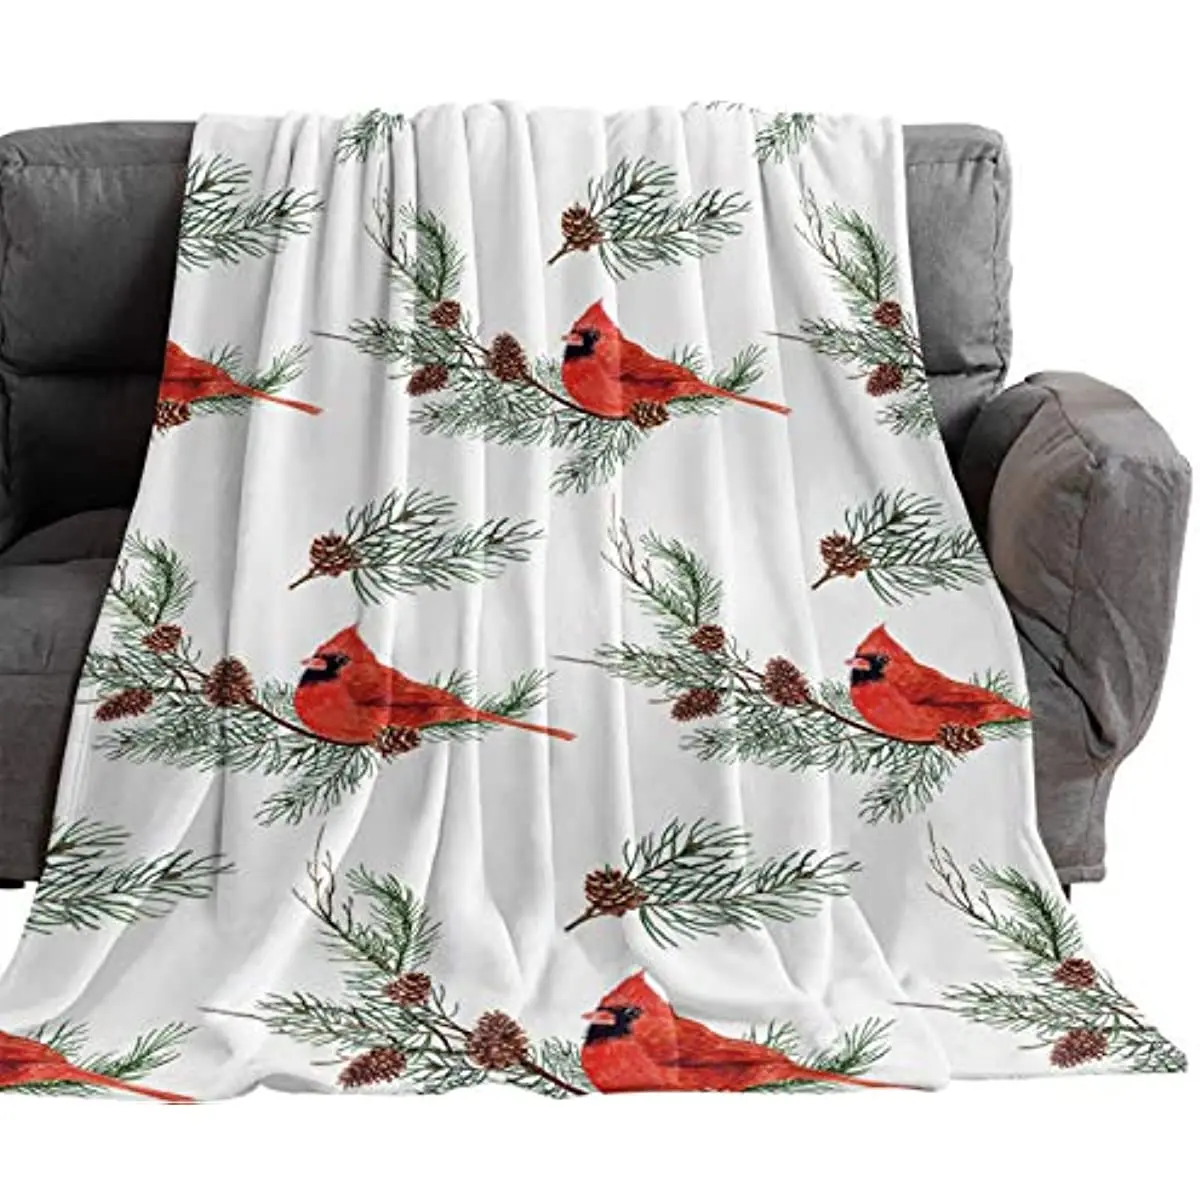 

SUN-Shine Christmas Cardinal Throw Blankets, Cardinal Birds with Pine Cones Leaves Fuzzy Flannel Fleece Throws Luxury Super Soft